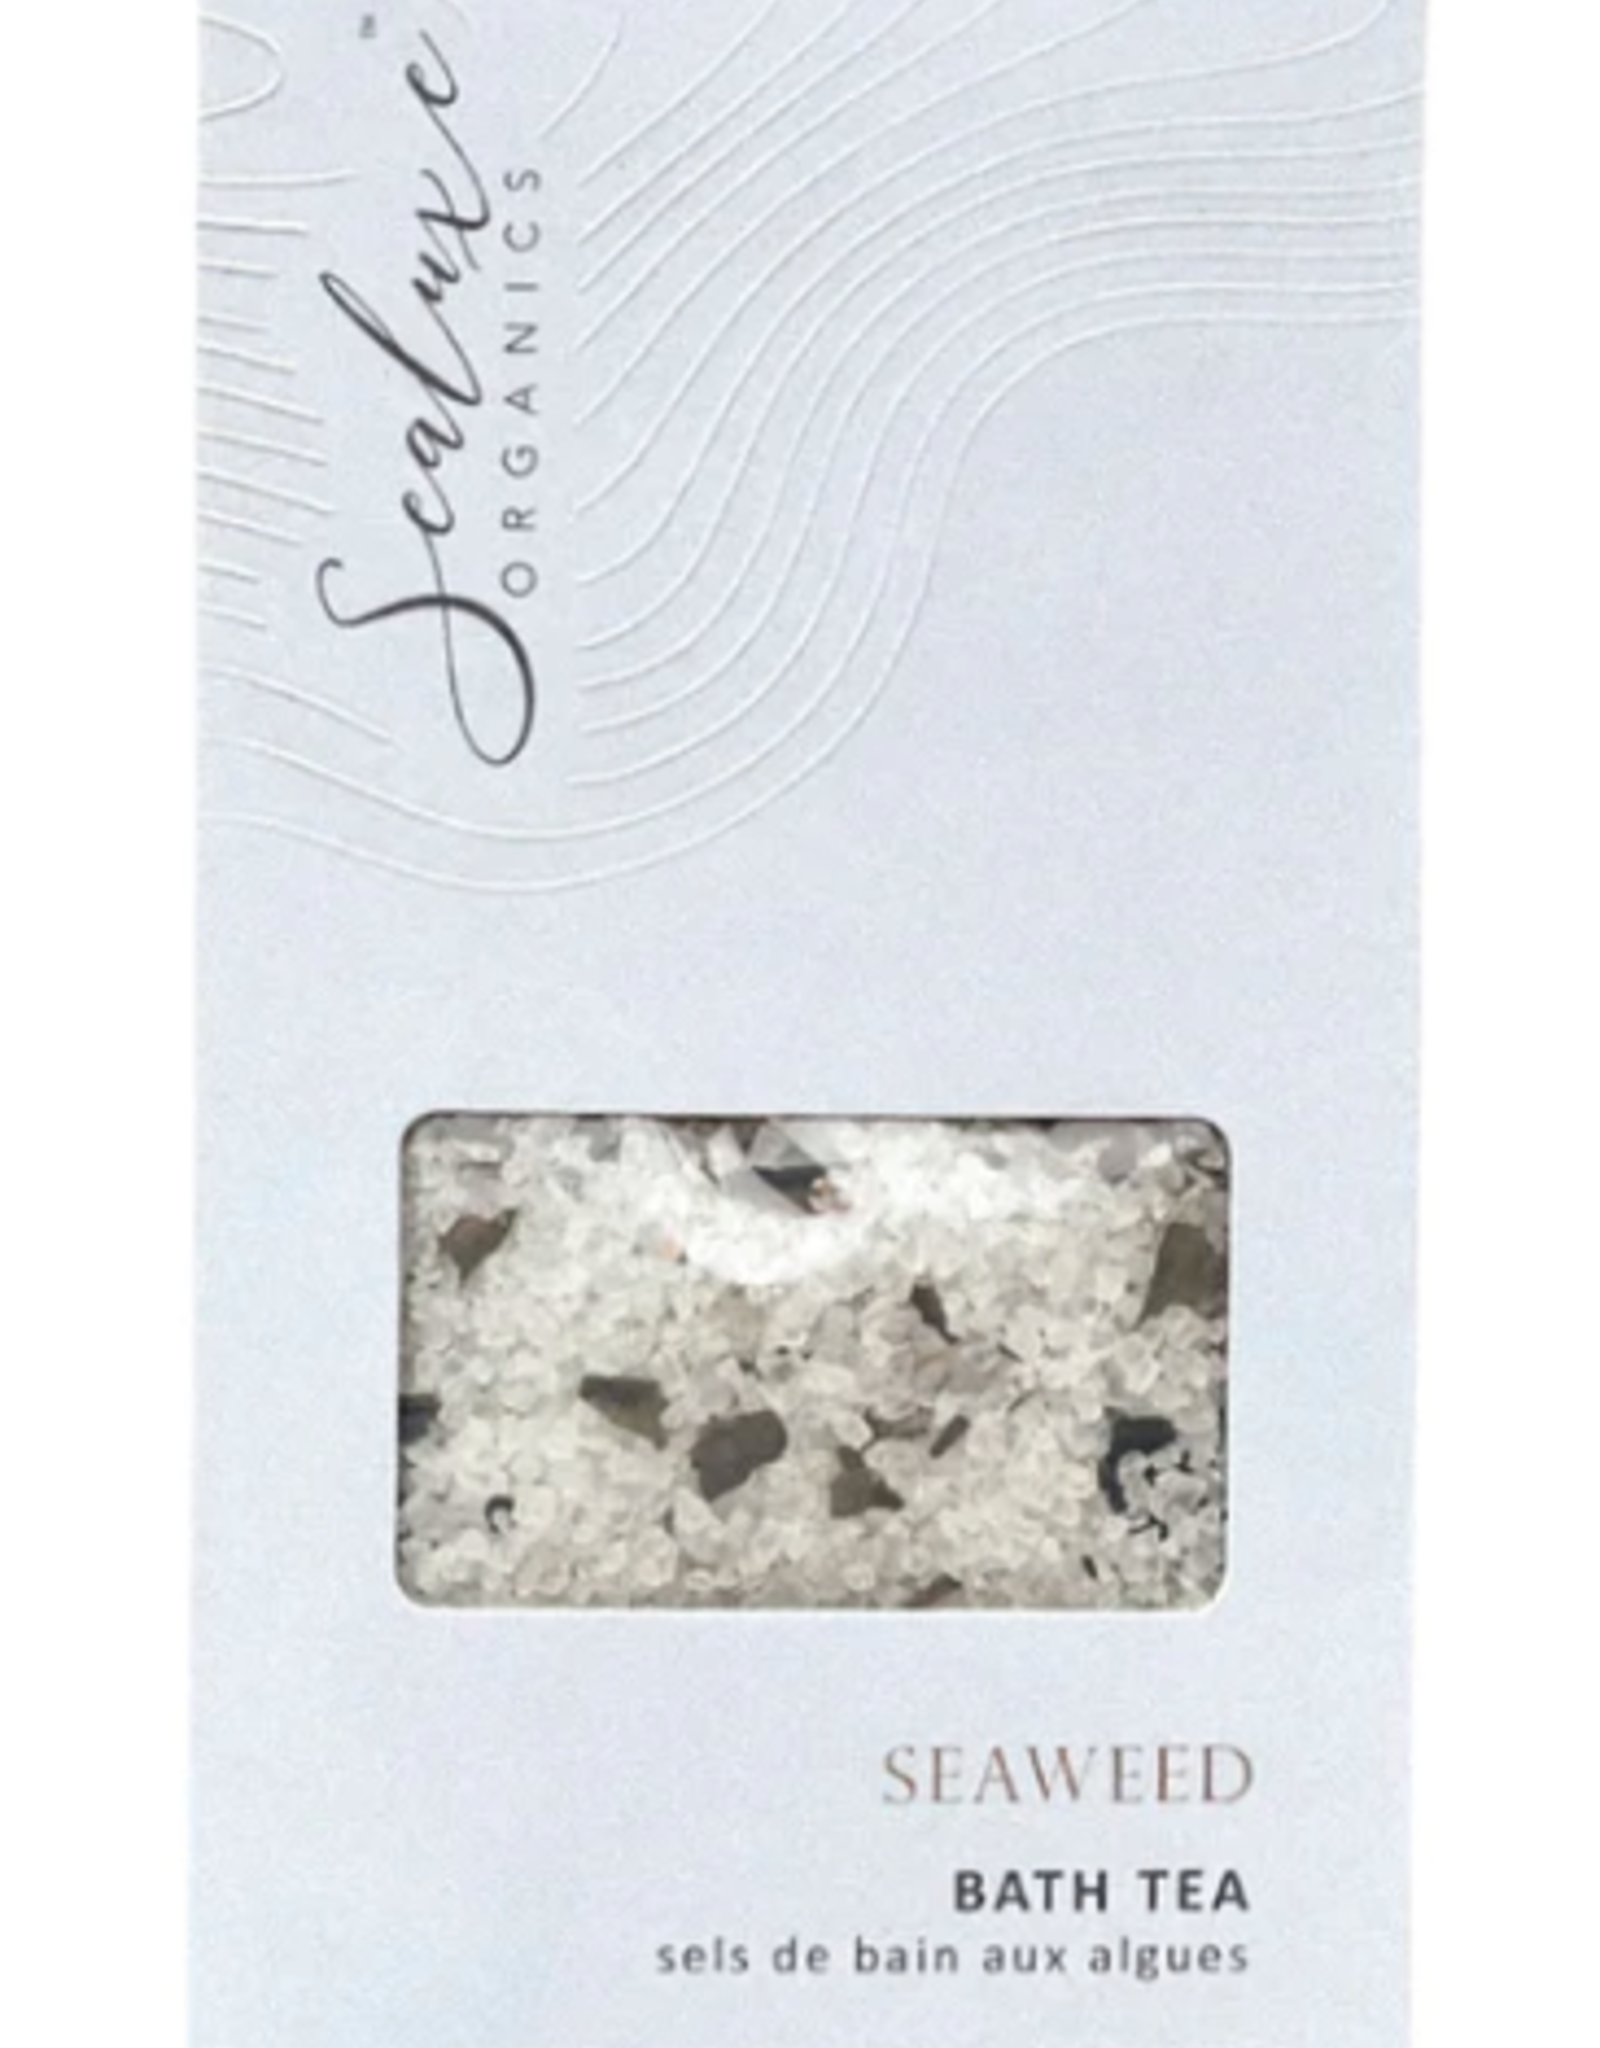 SeaLuxe Seaweed Bath Tea 200g